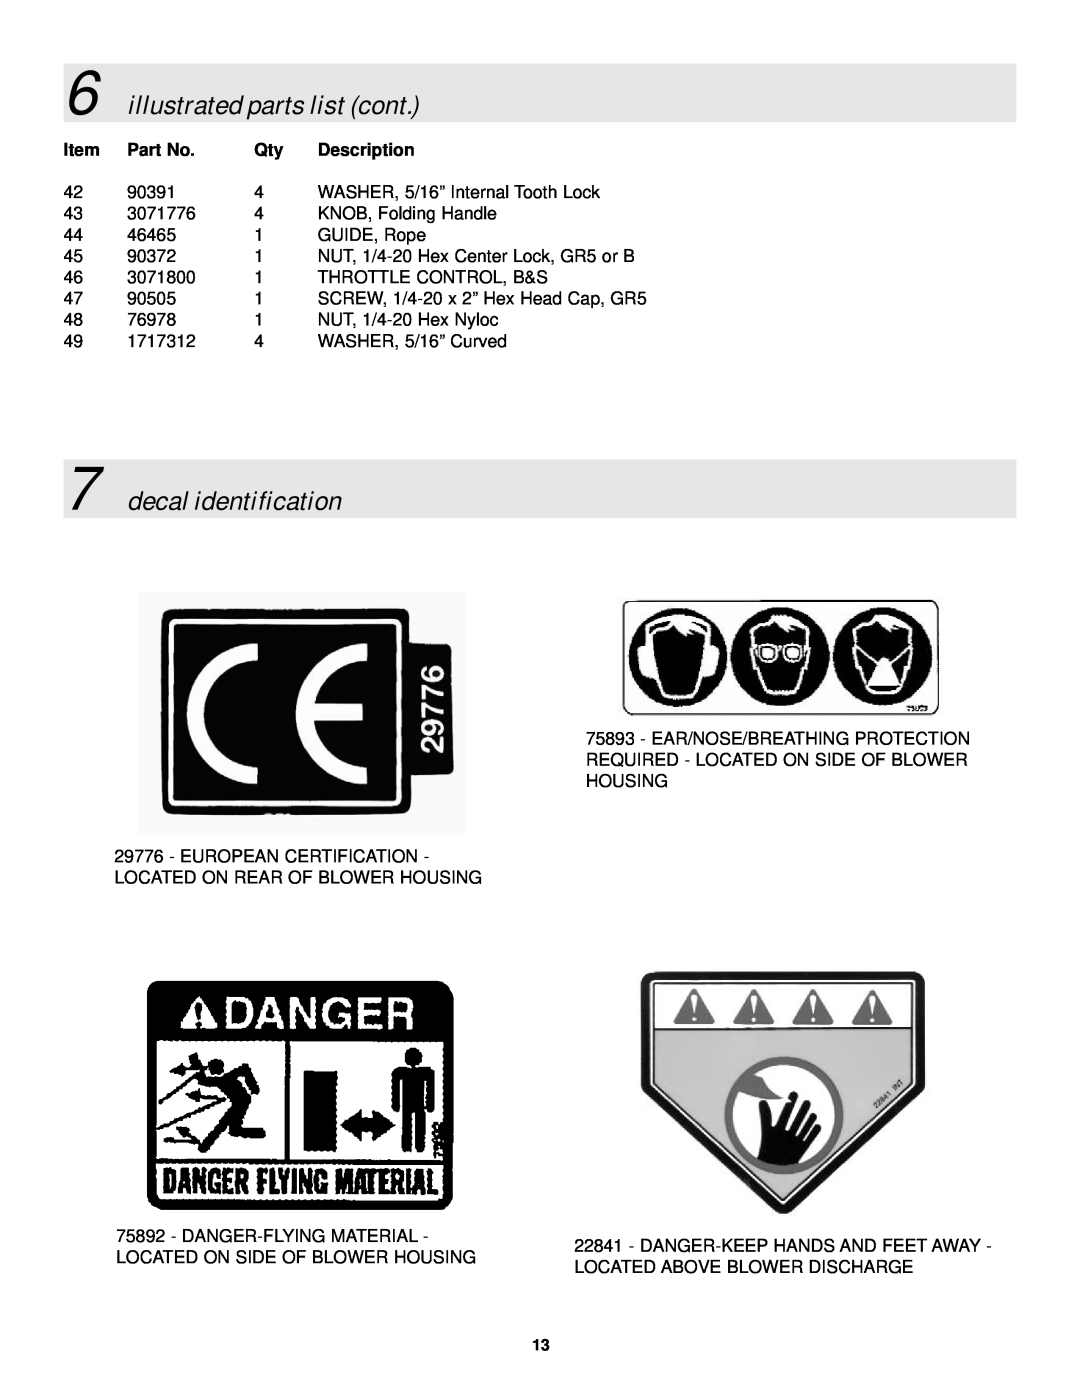 Snapper ELBC6151BV manual decal identification, illustrated parts list cont, Item, Description 